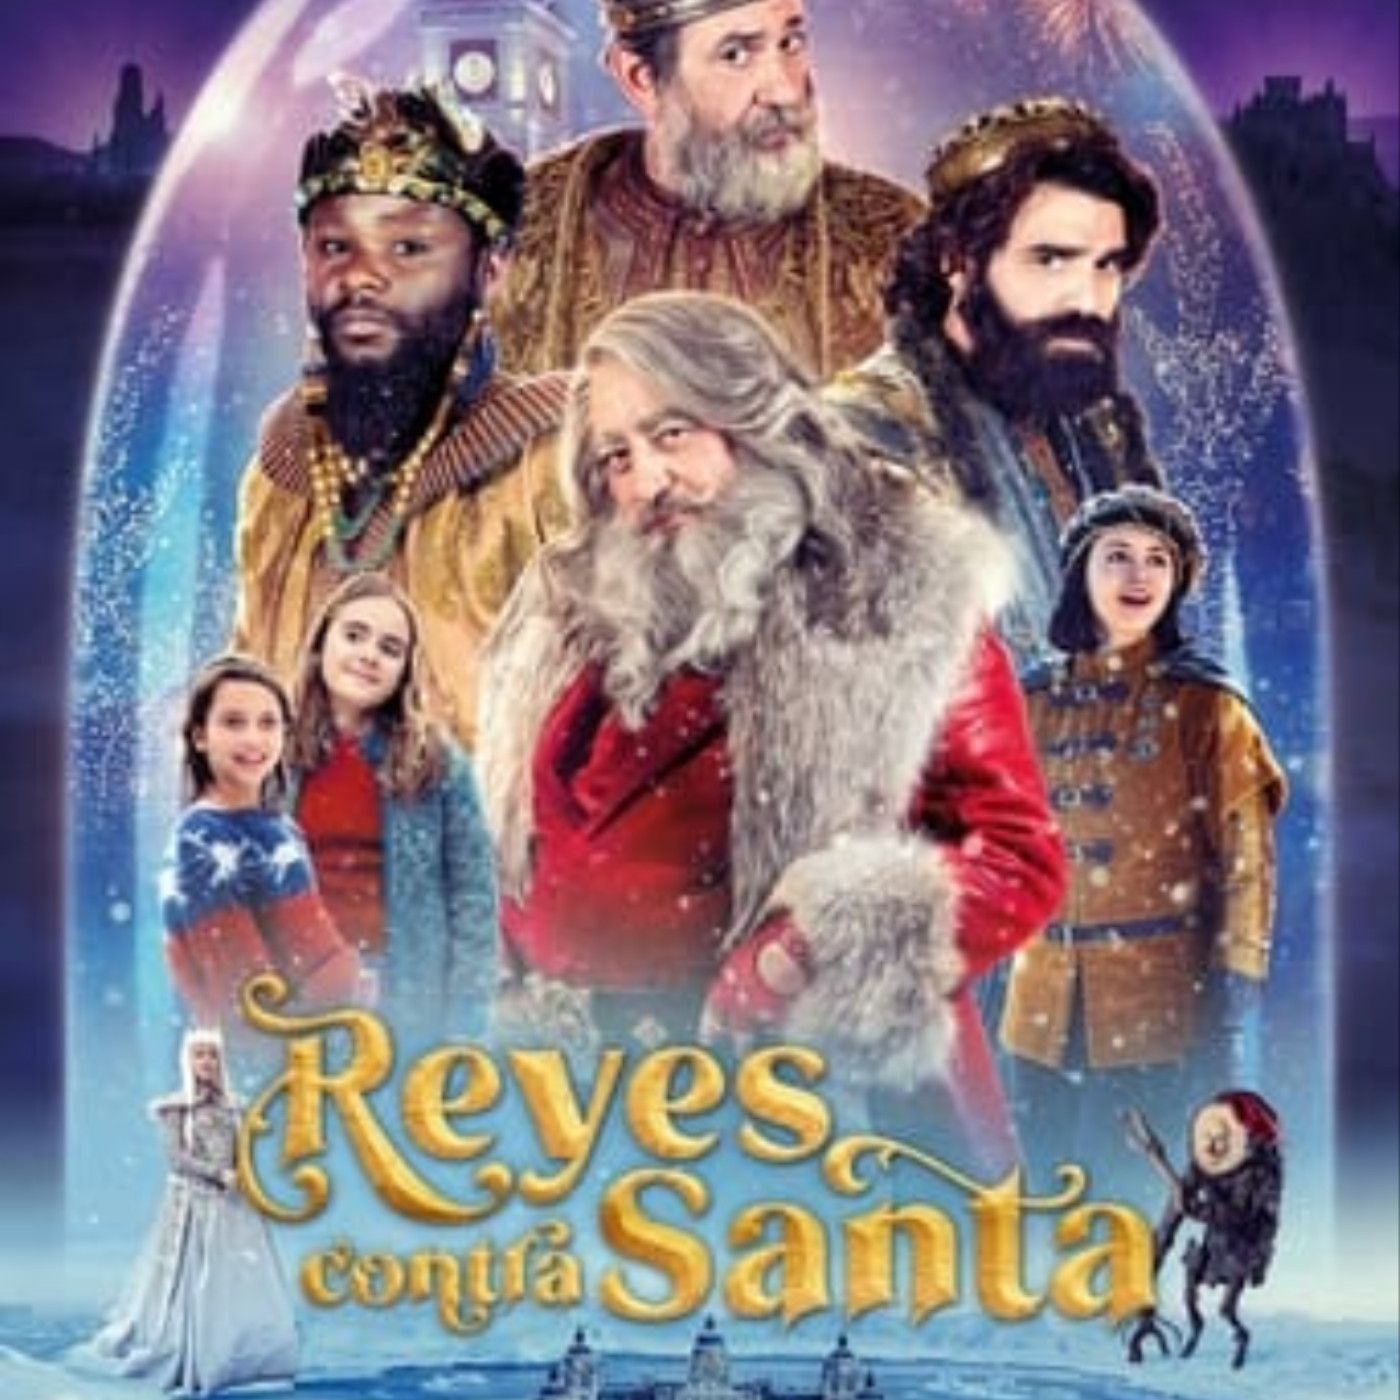 Ver Reyes contra Santa online gratis en español latino - Estrenos | Podcast  on SoundOn